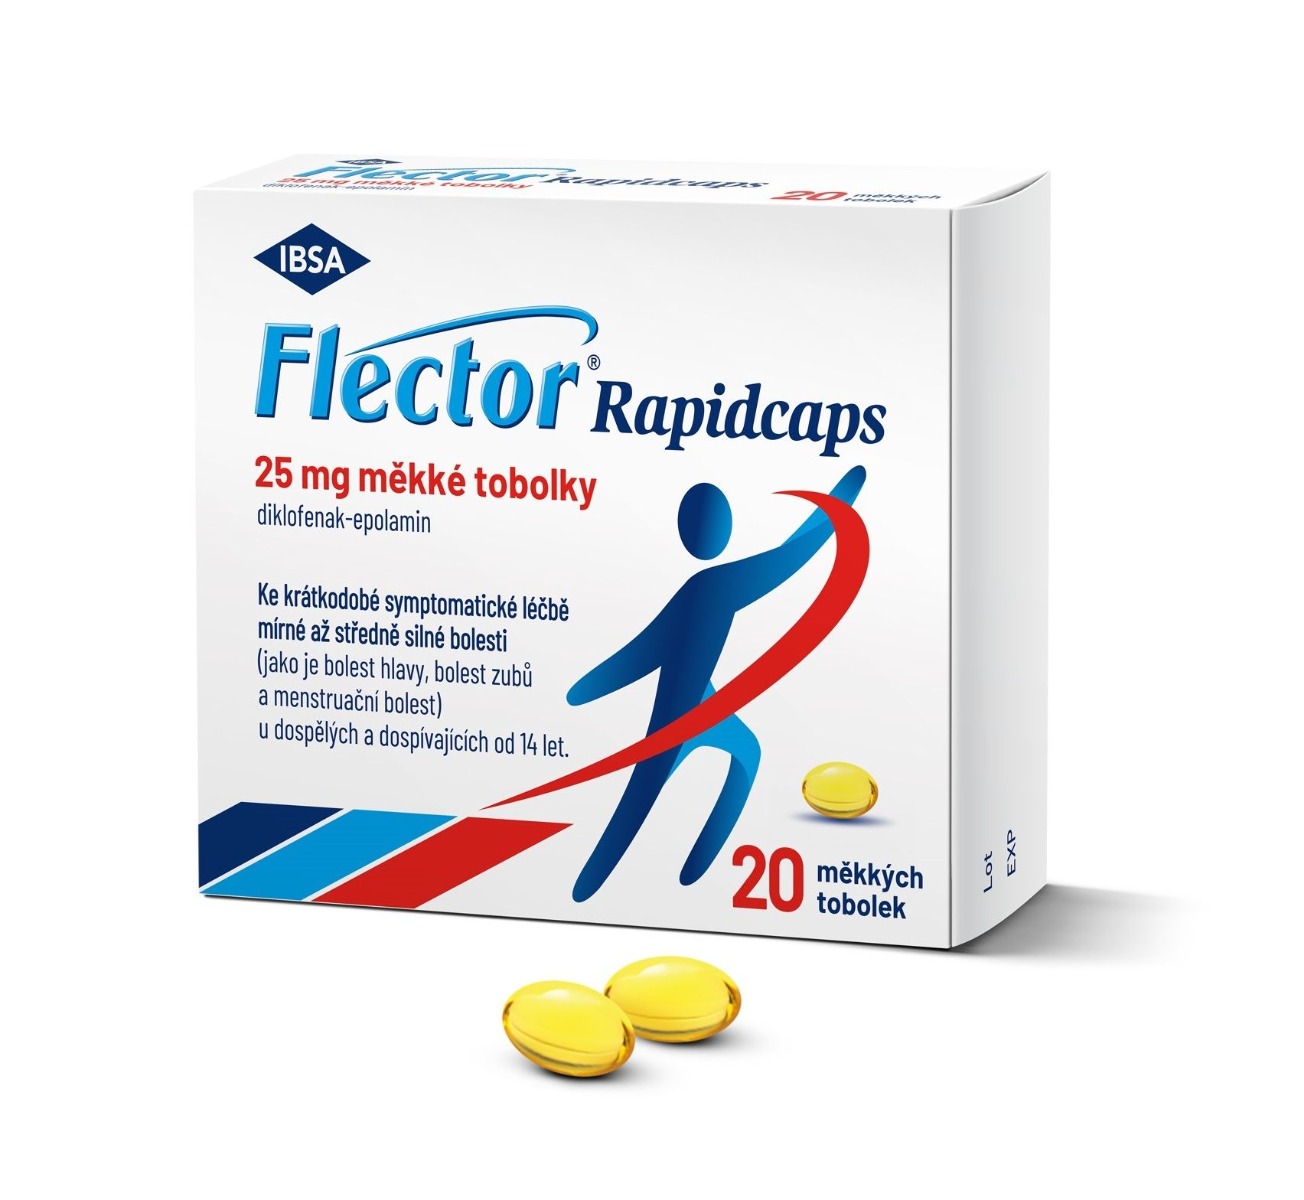 Flector Rapidcaps 25 mg 20 měkkých tobolek Flector